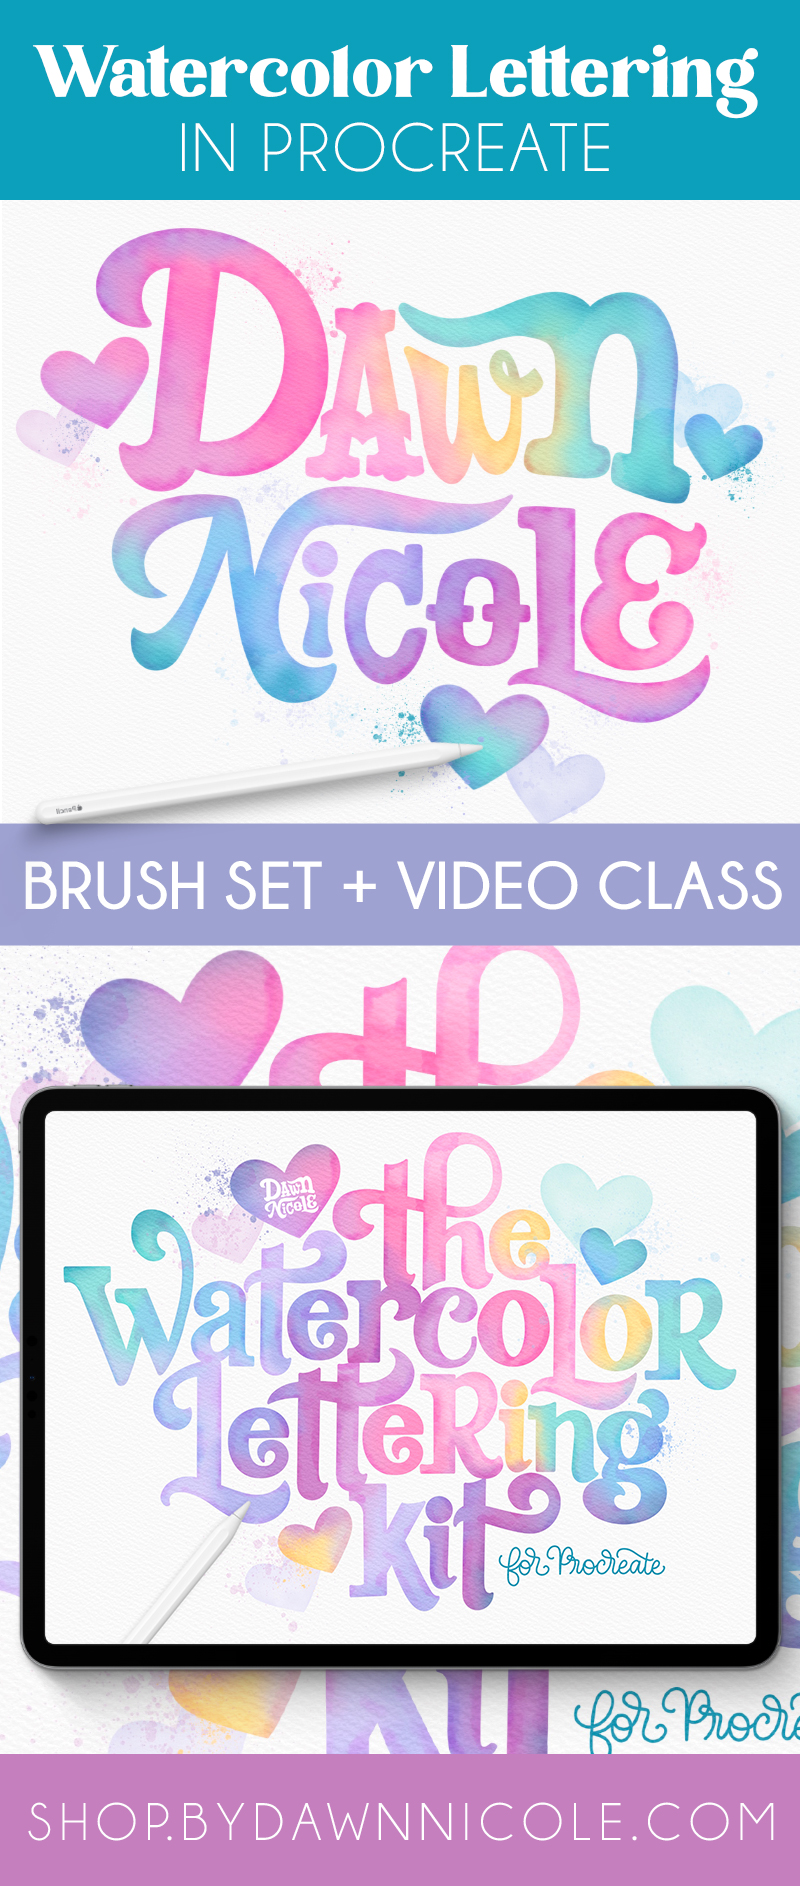 Watercolor Lettering in Procreate. Learn to Create Gorgeous Watercolor Lettering digitally in the Procreate App!